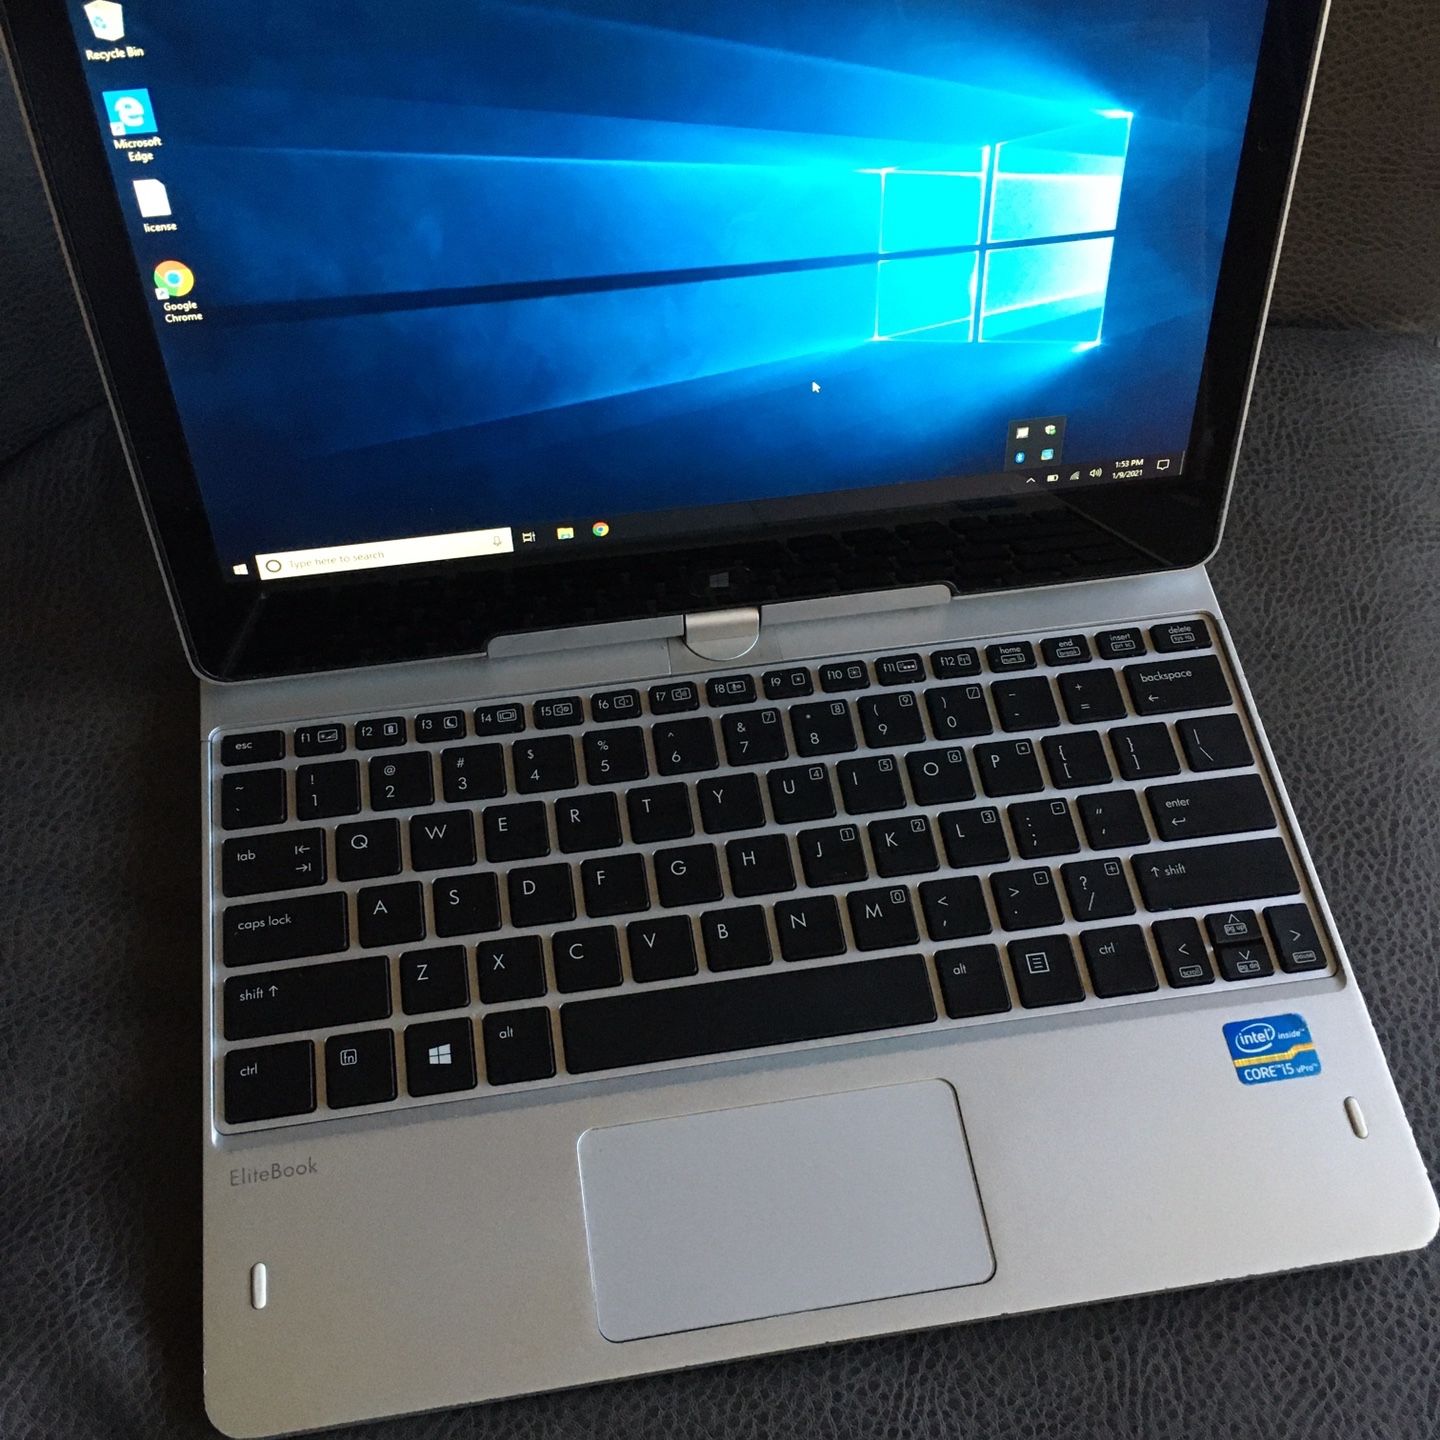 HP EliteBook 810 G1 touchscreen laptop PC tablet i5 120gb SSD 8gb RAM Windows 10 Pro Office 2019